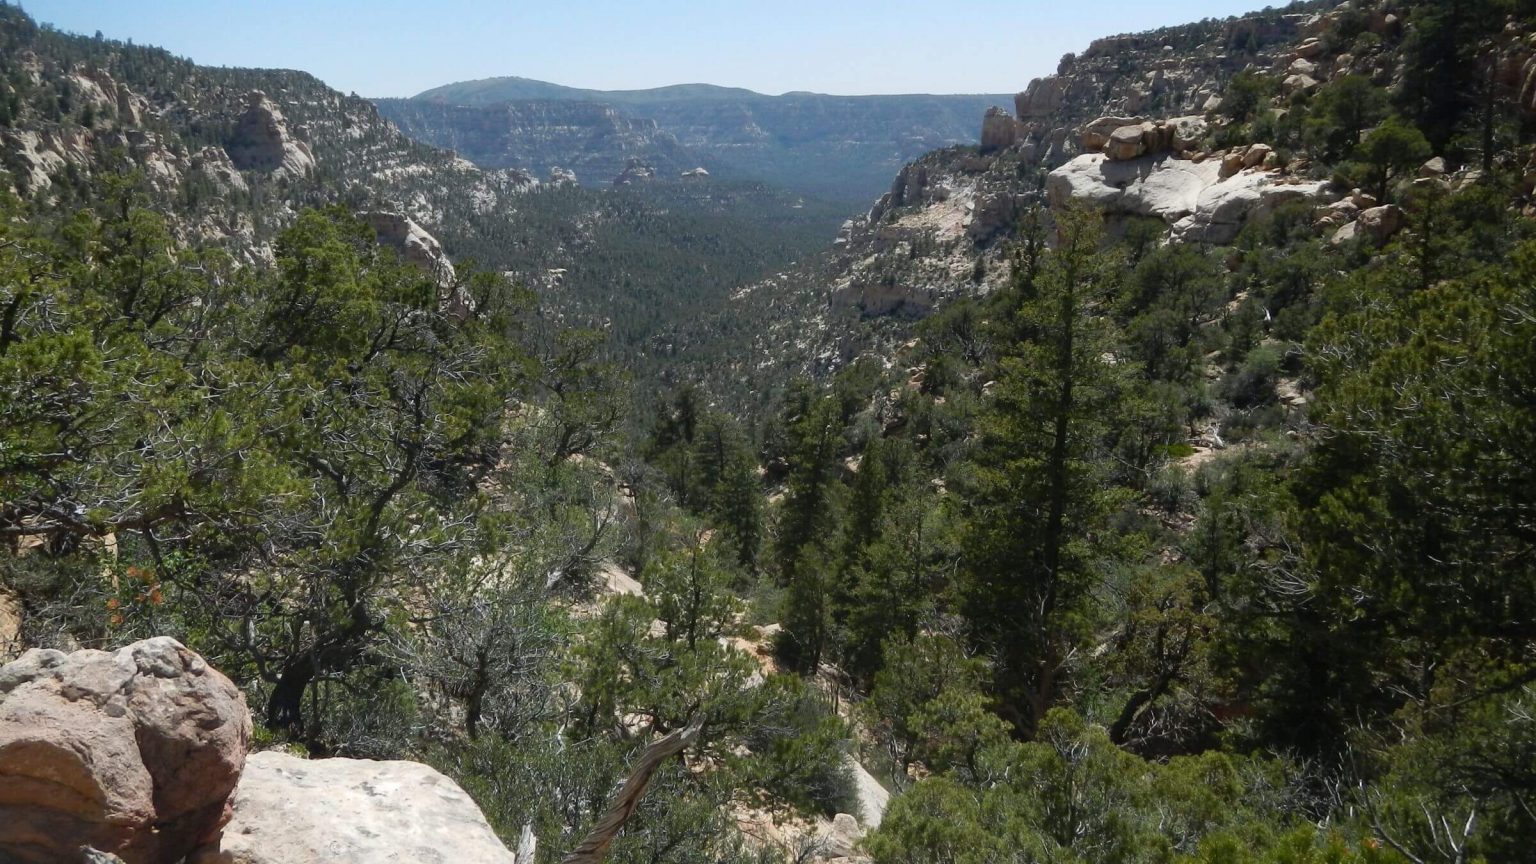 Dark Canyon Wilderness, rim view of canyon, May